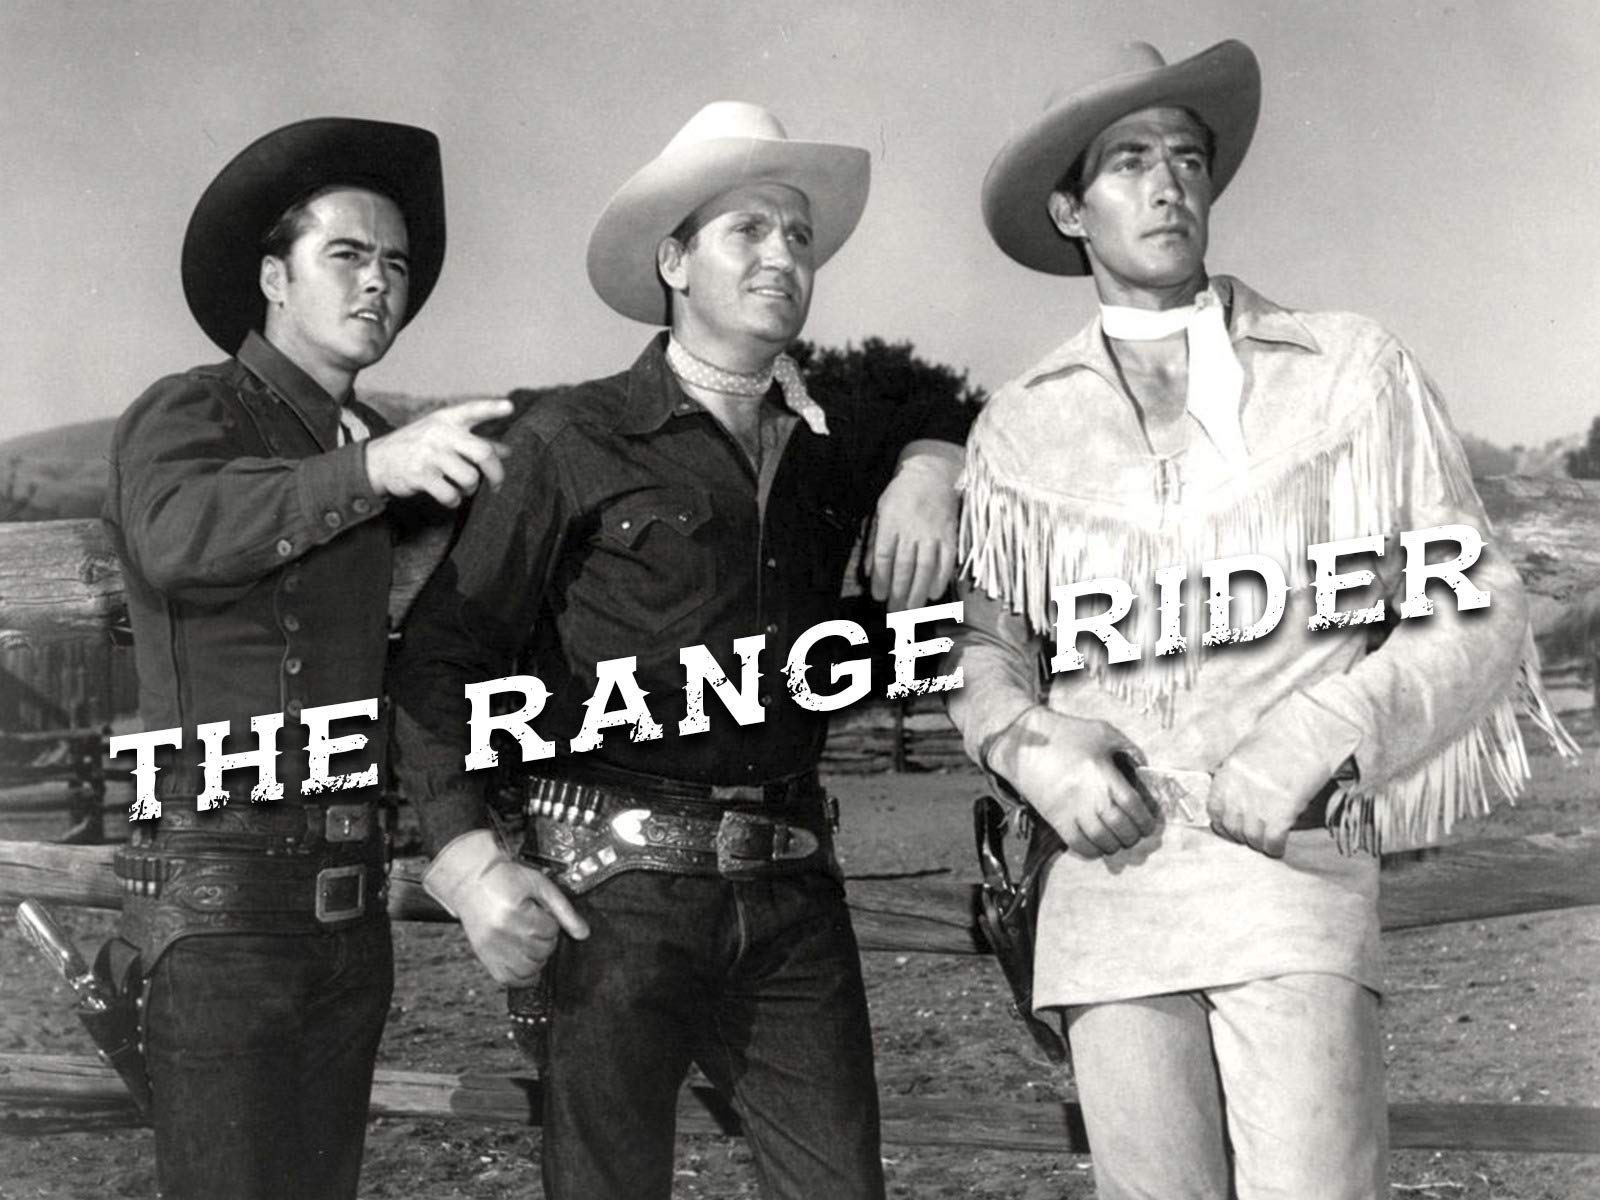 Watch The Range Rider - Season 2